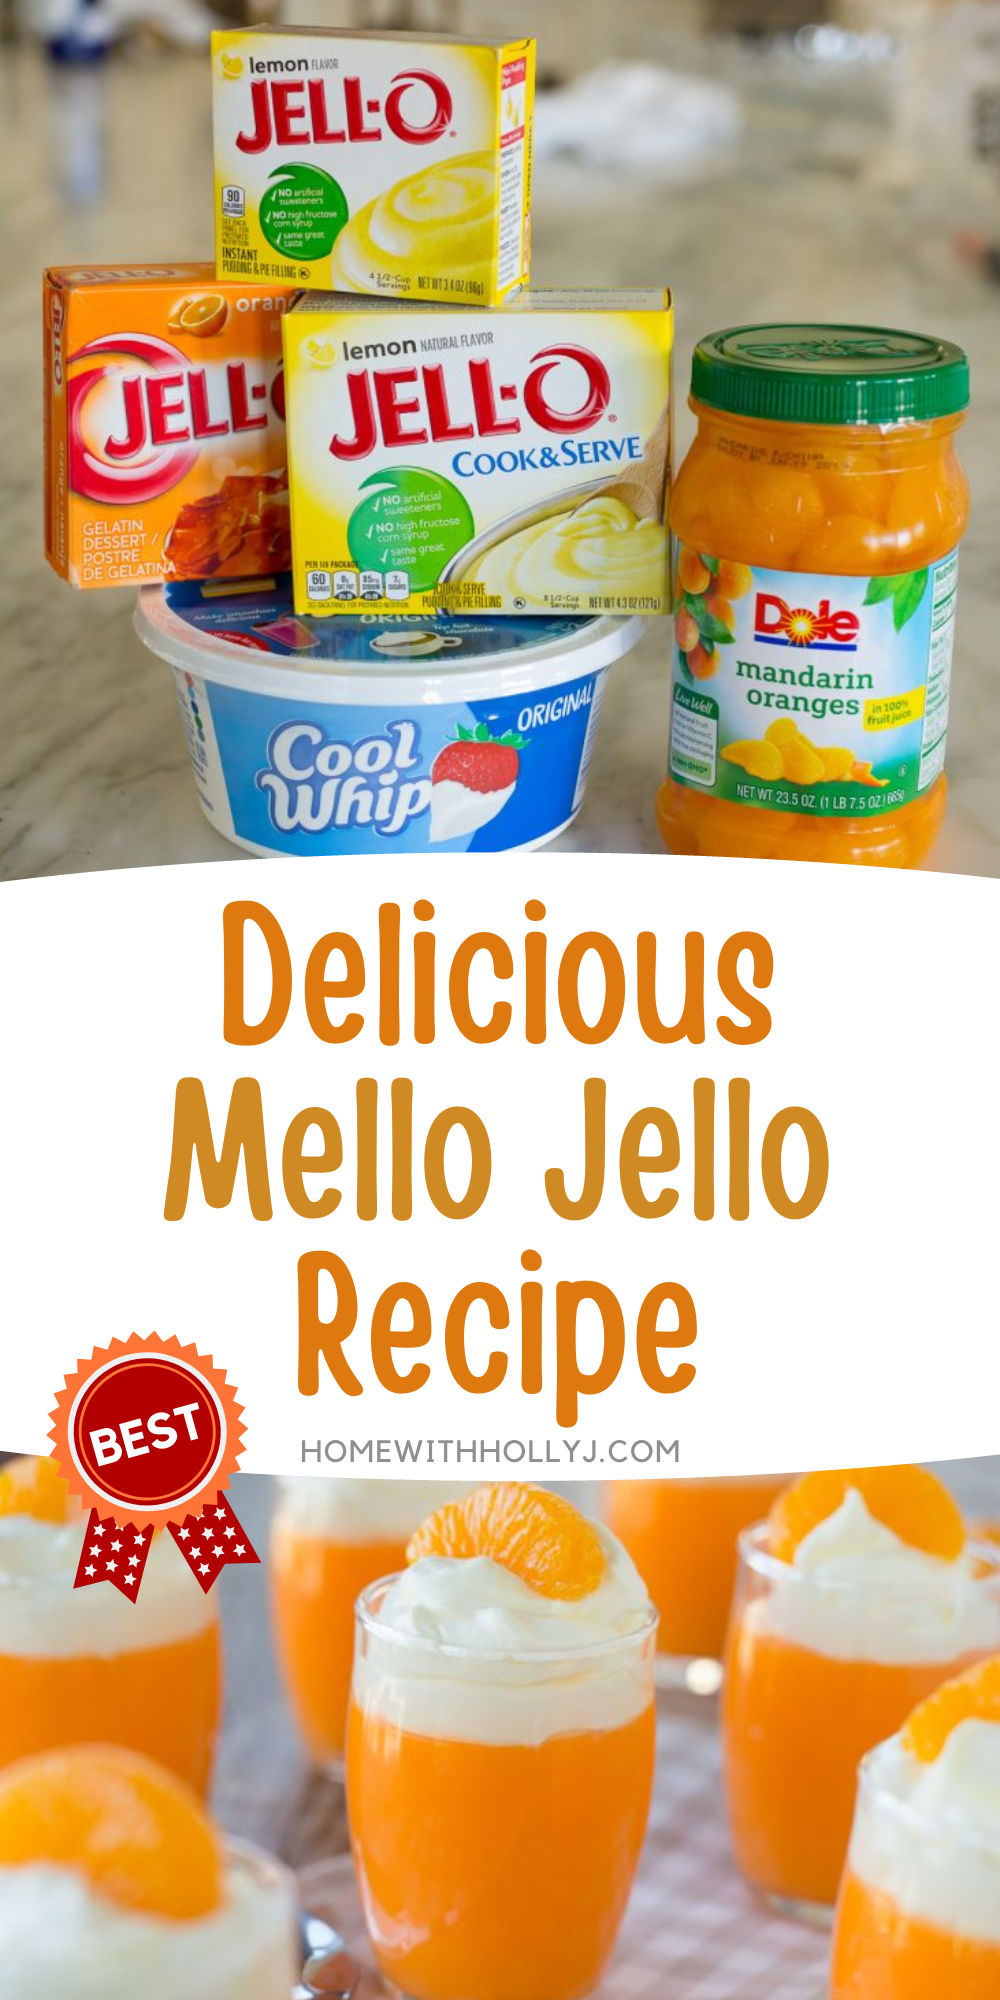 Sharing how to make this lemony Mello Jello holiday jello recipe for the whole family to enjoy! Perfect recipe for the holidays.